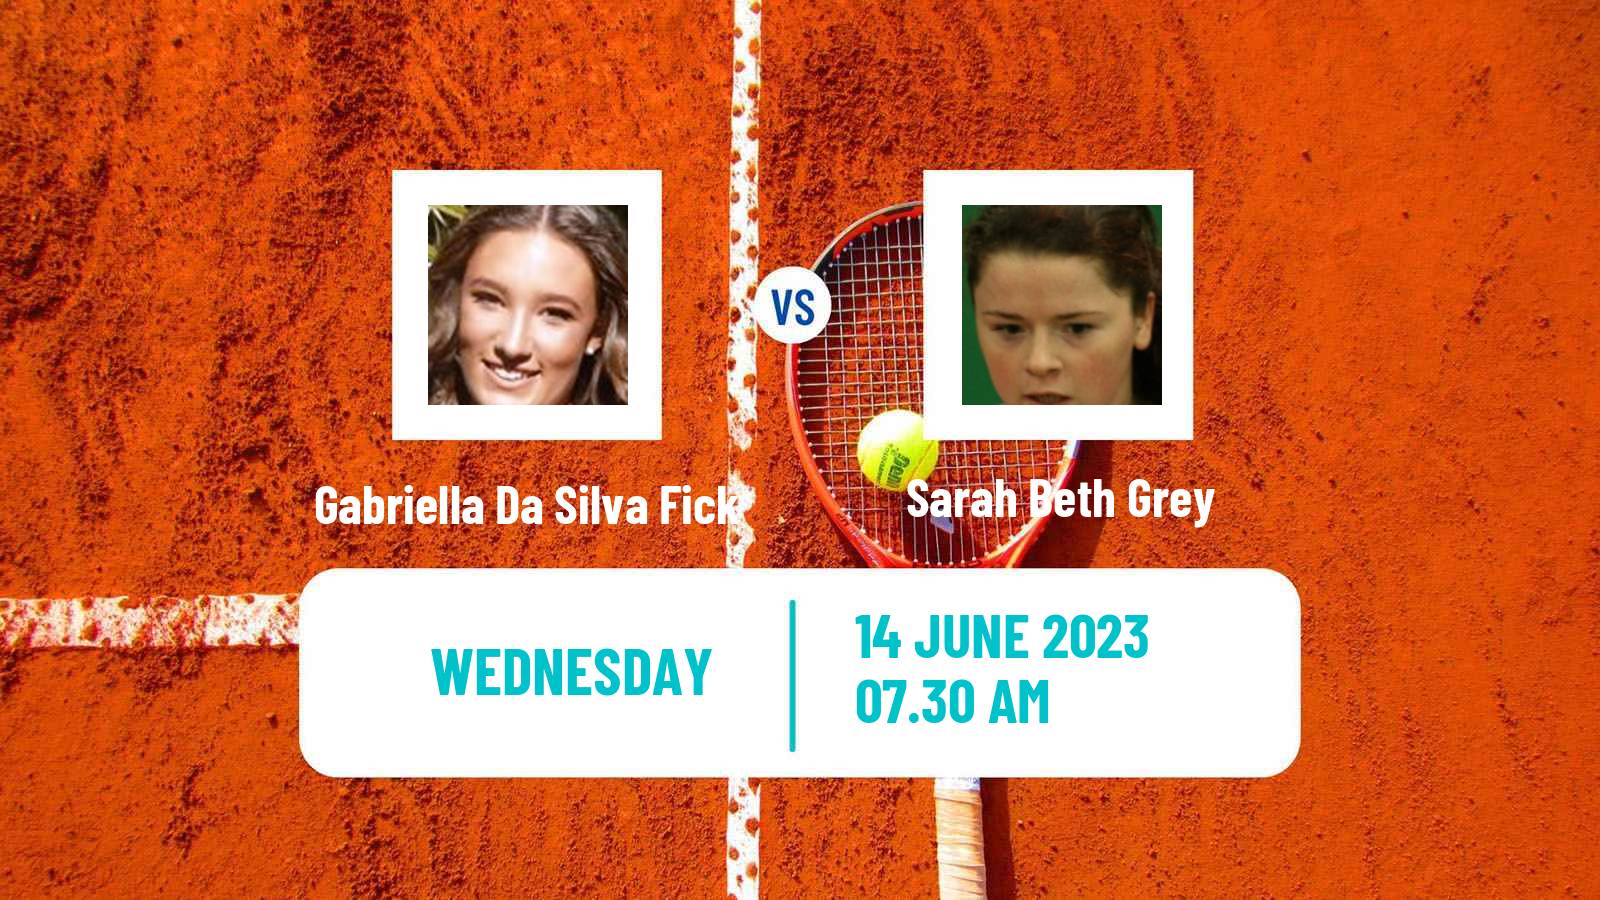 Tennis ITF W25 Guimaraes Women Gabriella Da Silva Fick - Sarah Beth Grey